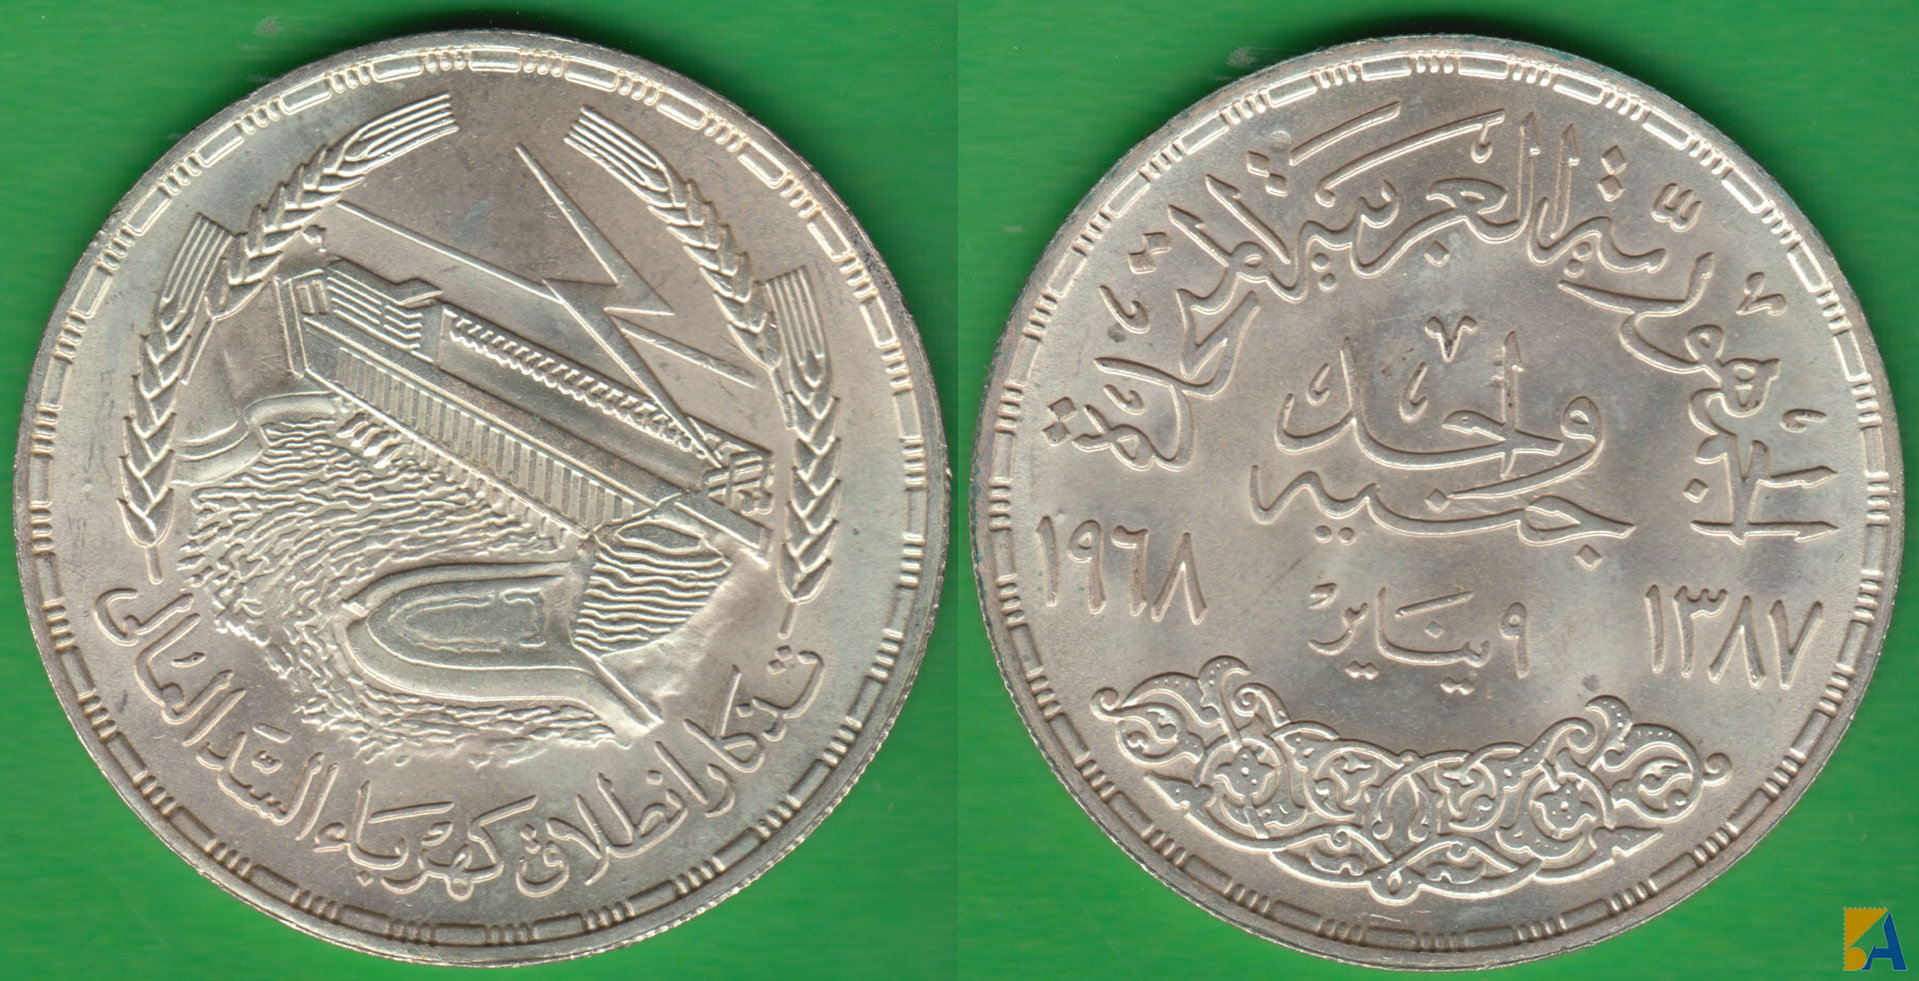 EGIPTO - EGYPT. 1 LIBRA (POUND) DE 1968. PLATA 0.720. (3)